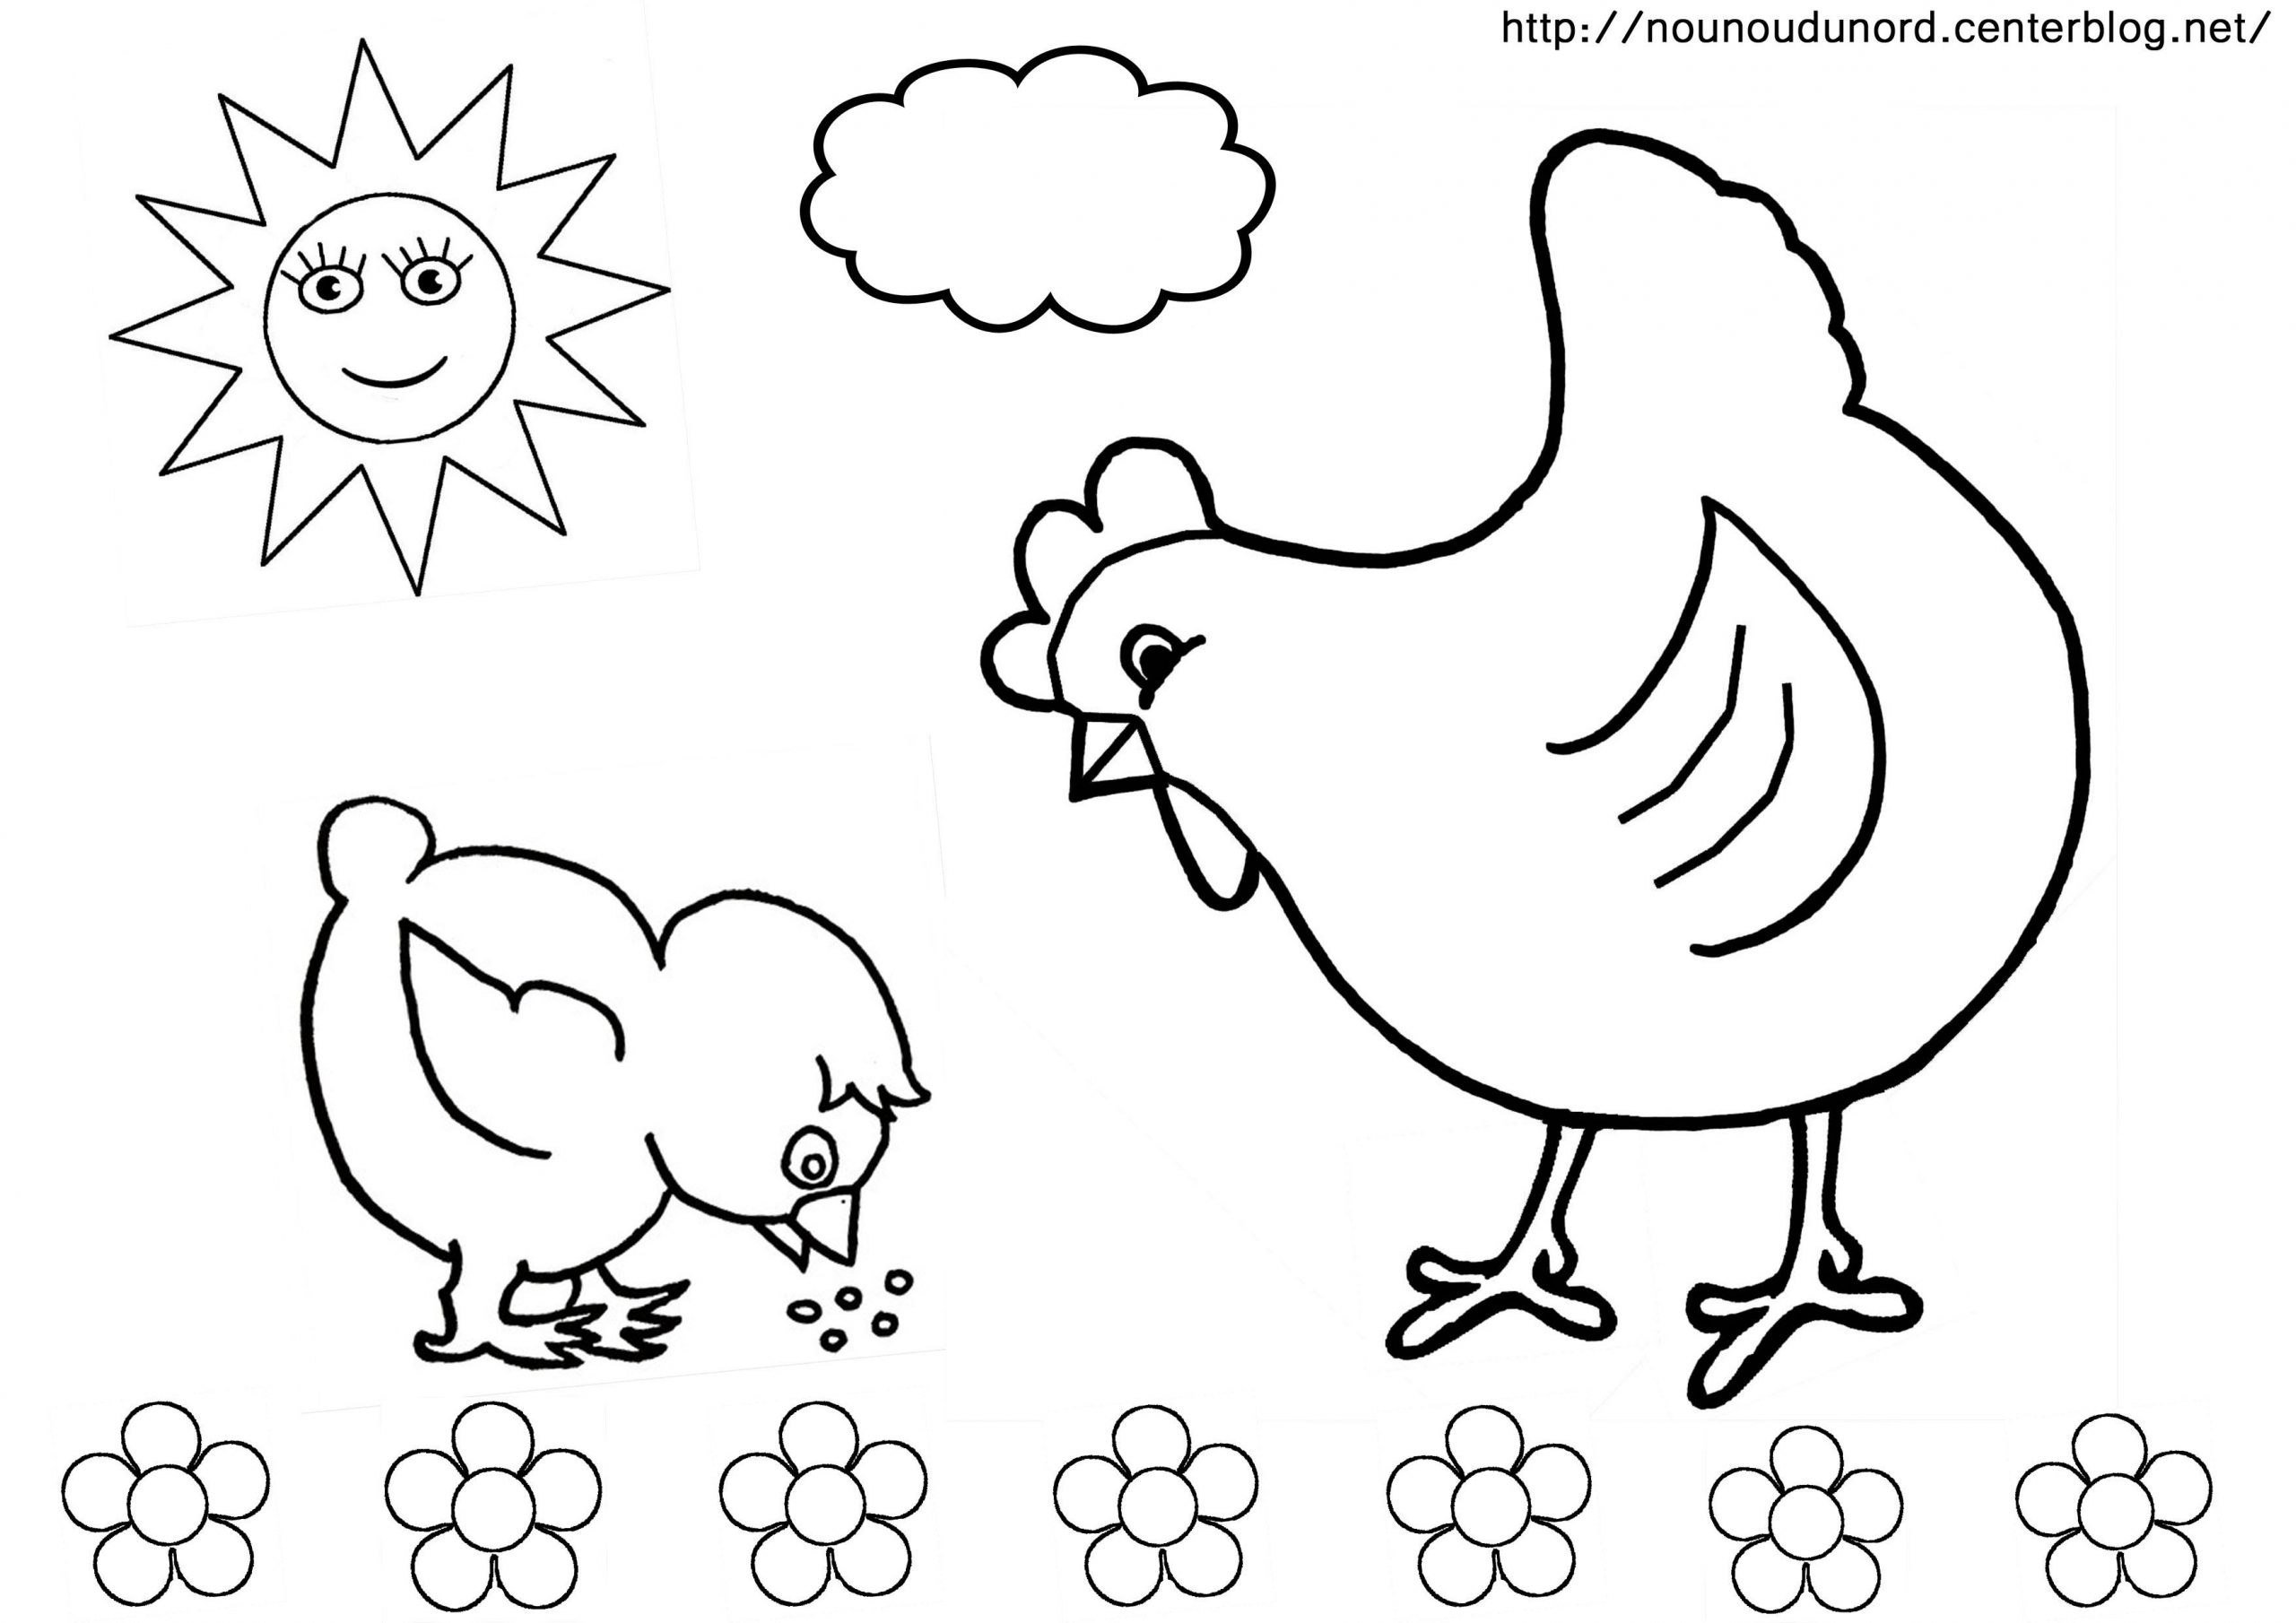 Раскраска 3 цыпленка. Курица раскраска для детей. Курочка раскраска для малышей. Раскраска курица с цыплятами. Курочка с цыплятами раскраска.